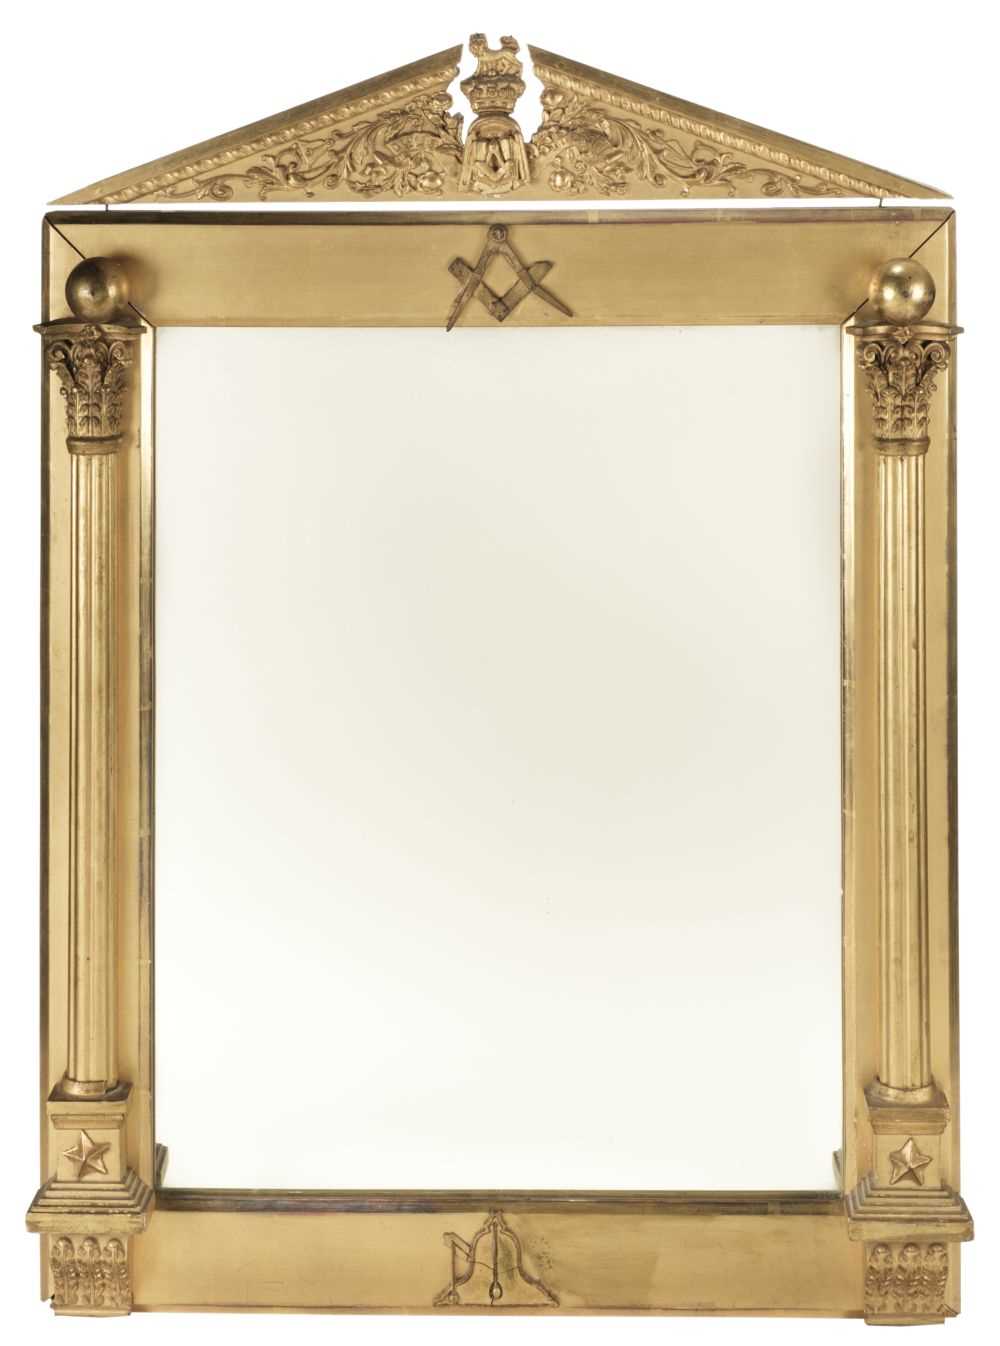 Lot 116 - Masonic Mirror. A late 19th century Masonic gilt frame mirror